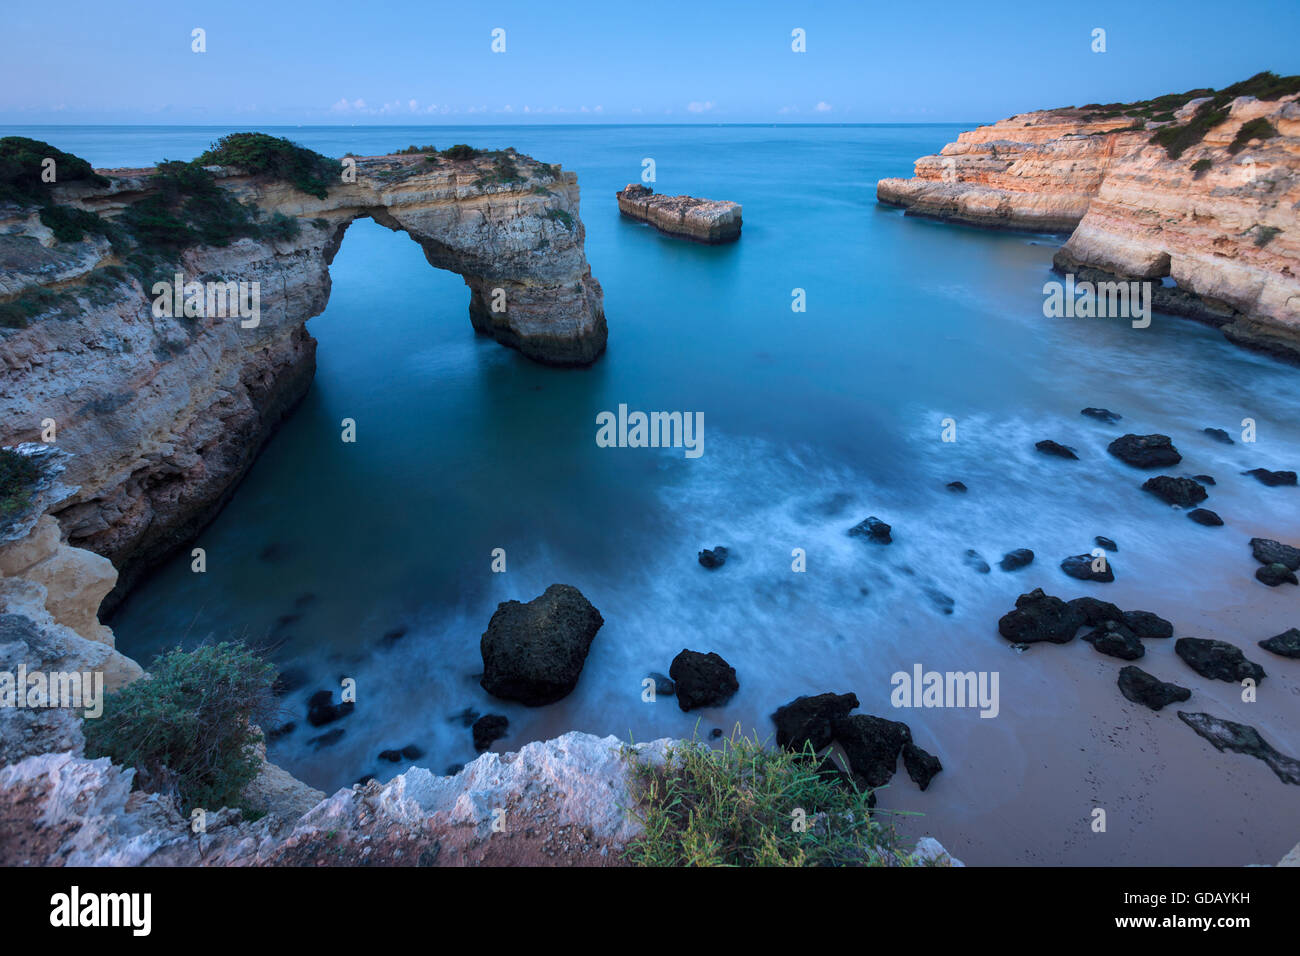 Praia da Albandeira,Portugal, Algarve Foto de stock